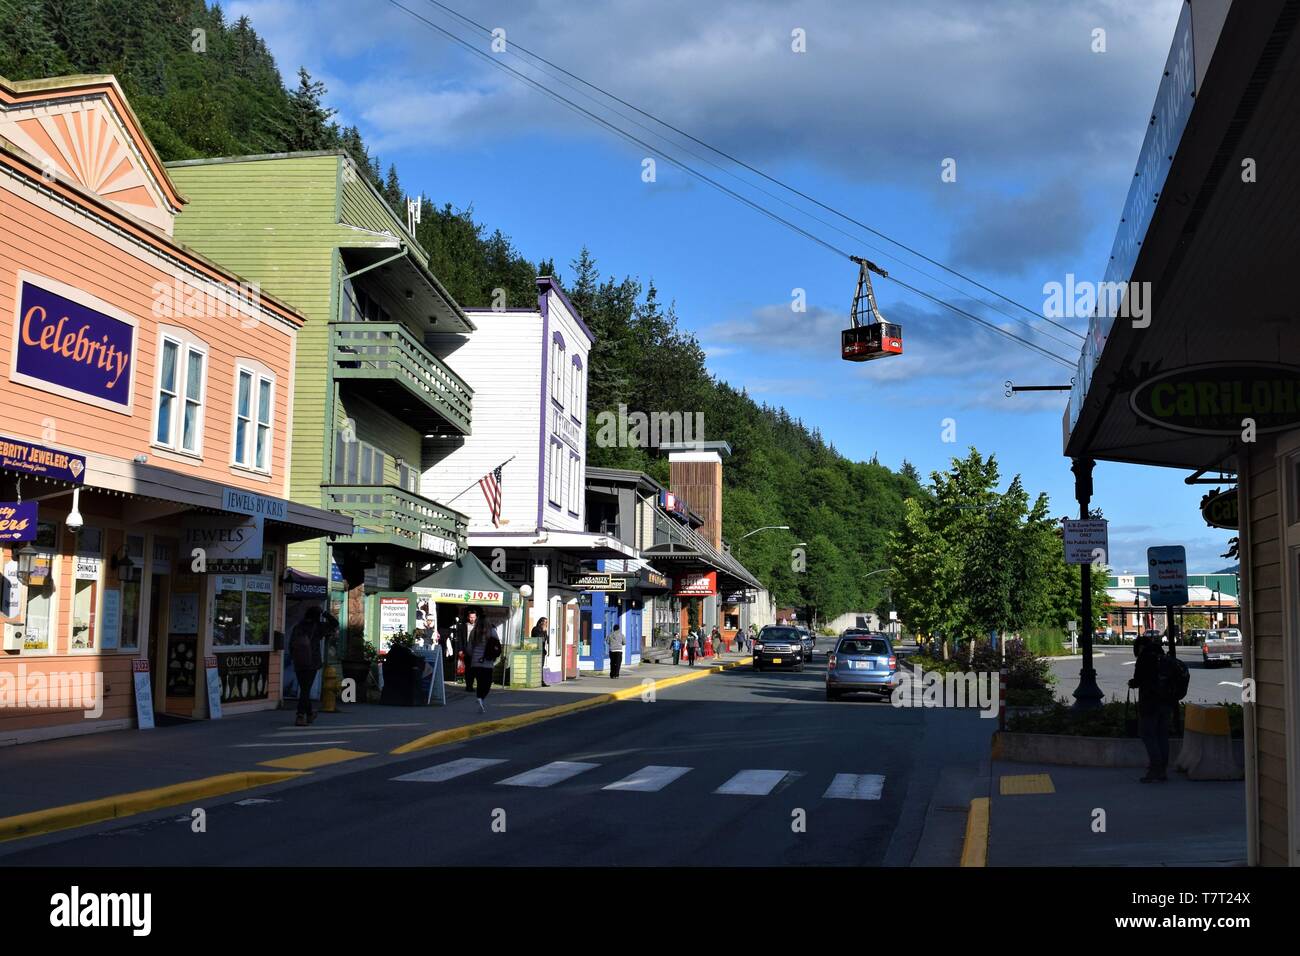 City scenes in Juneau Stock Photo